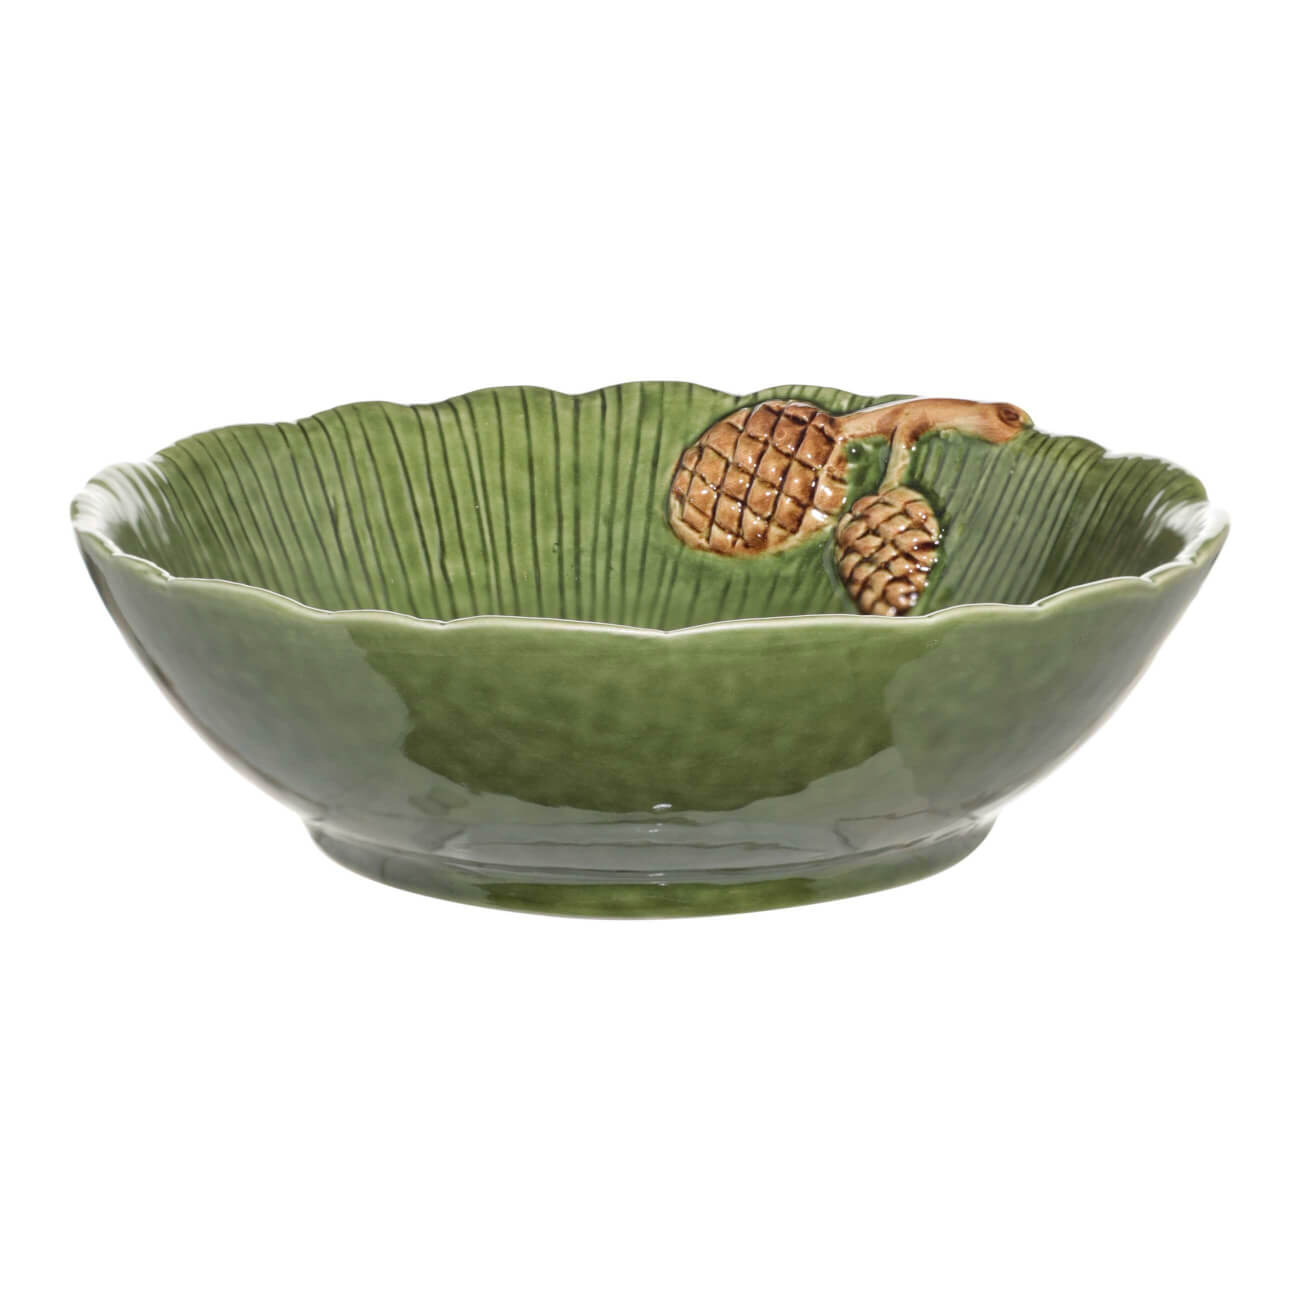 Салатник, 20х6 см, керамика, зеленый, Шишки на листе, Fir cone